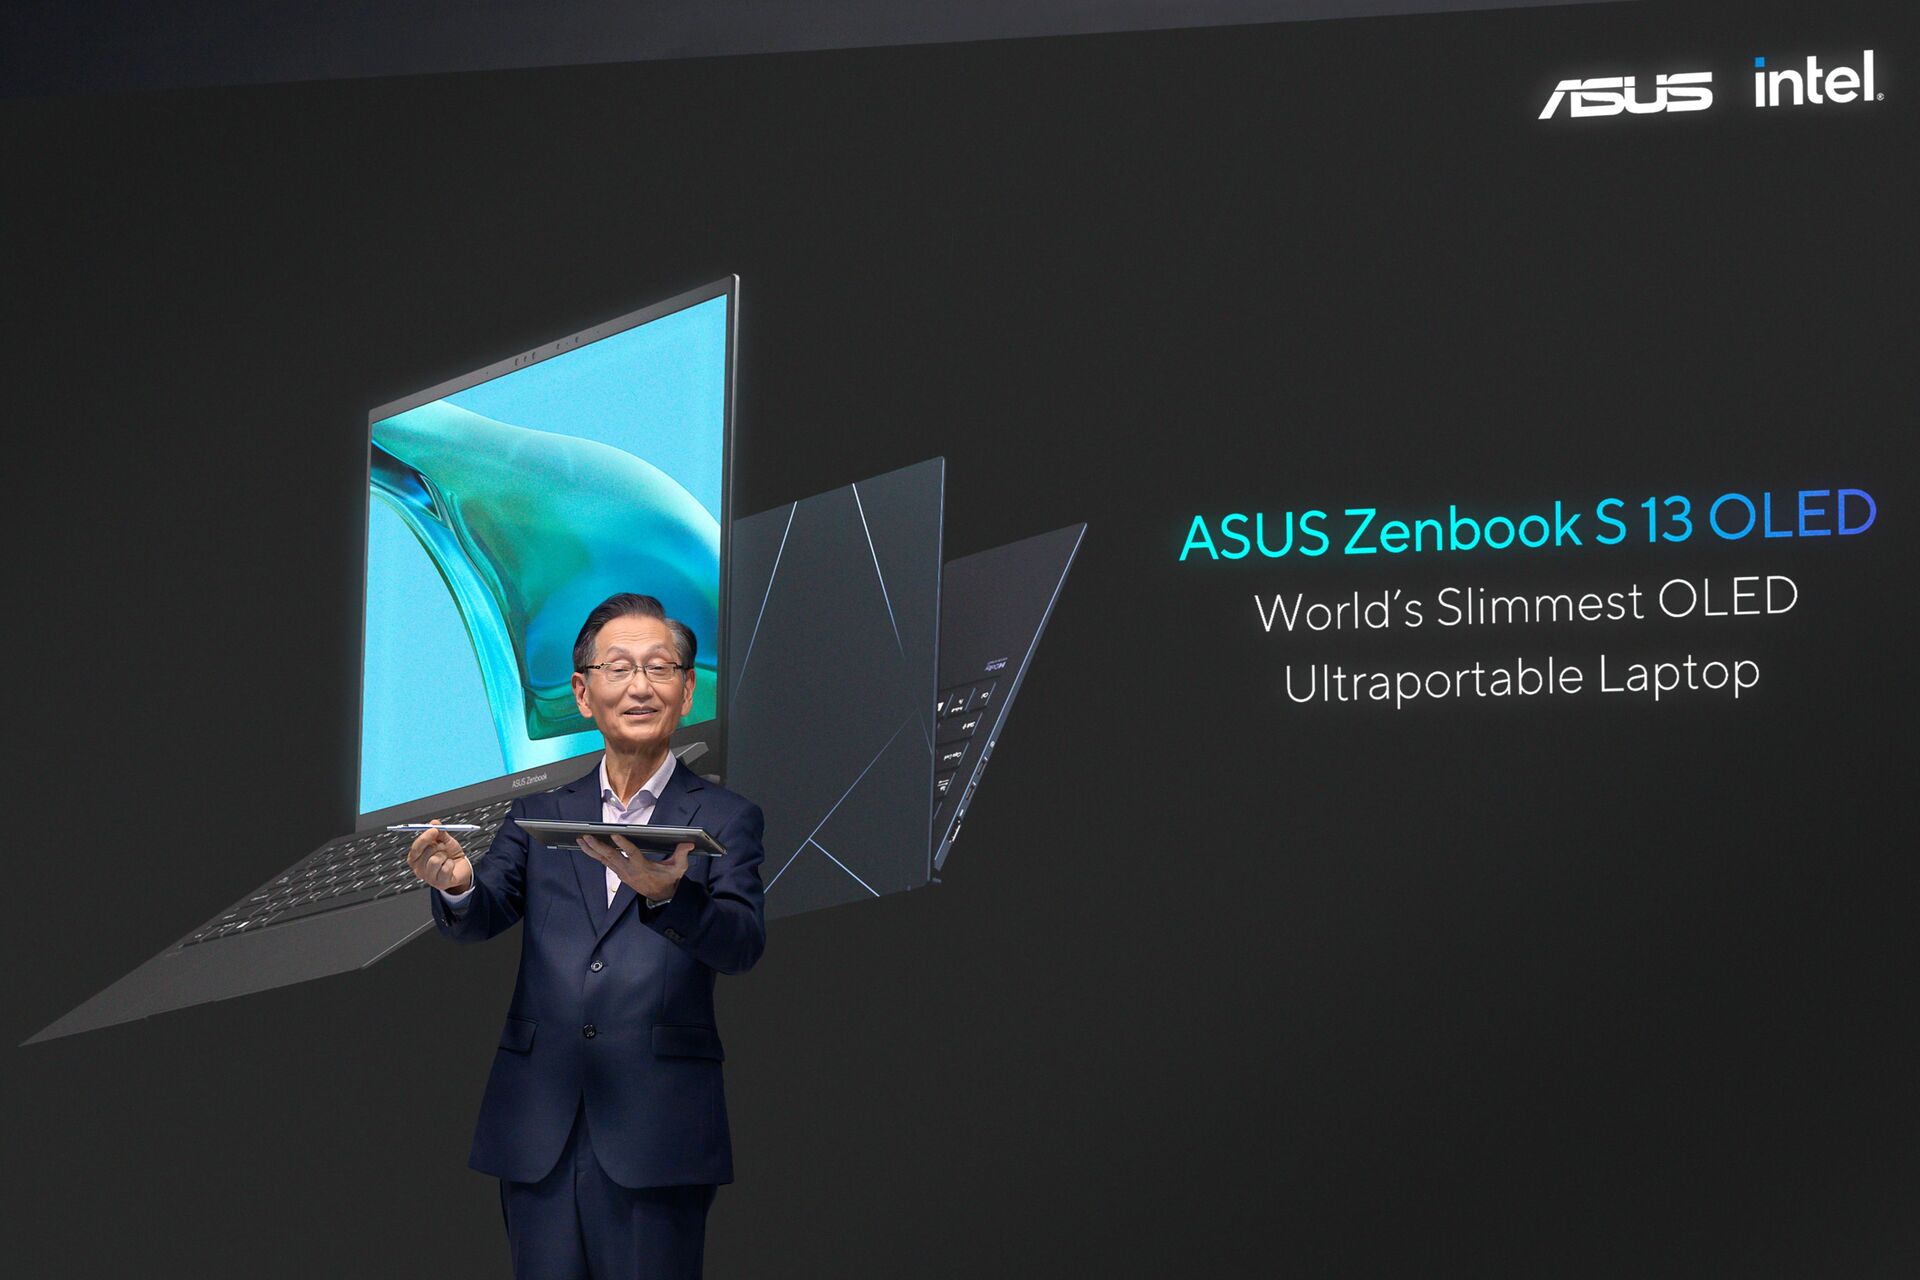 ASUS ZenBook S13 OLED